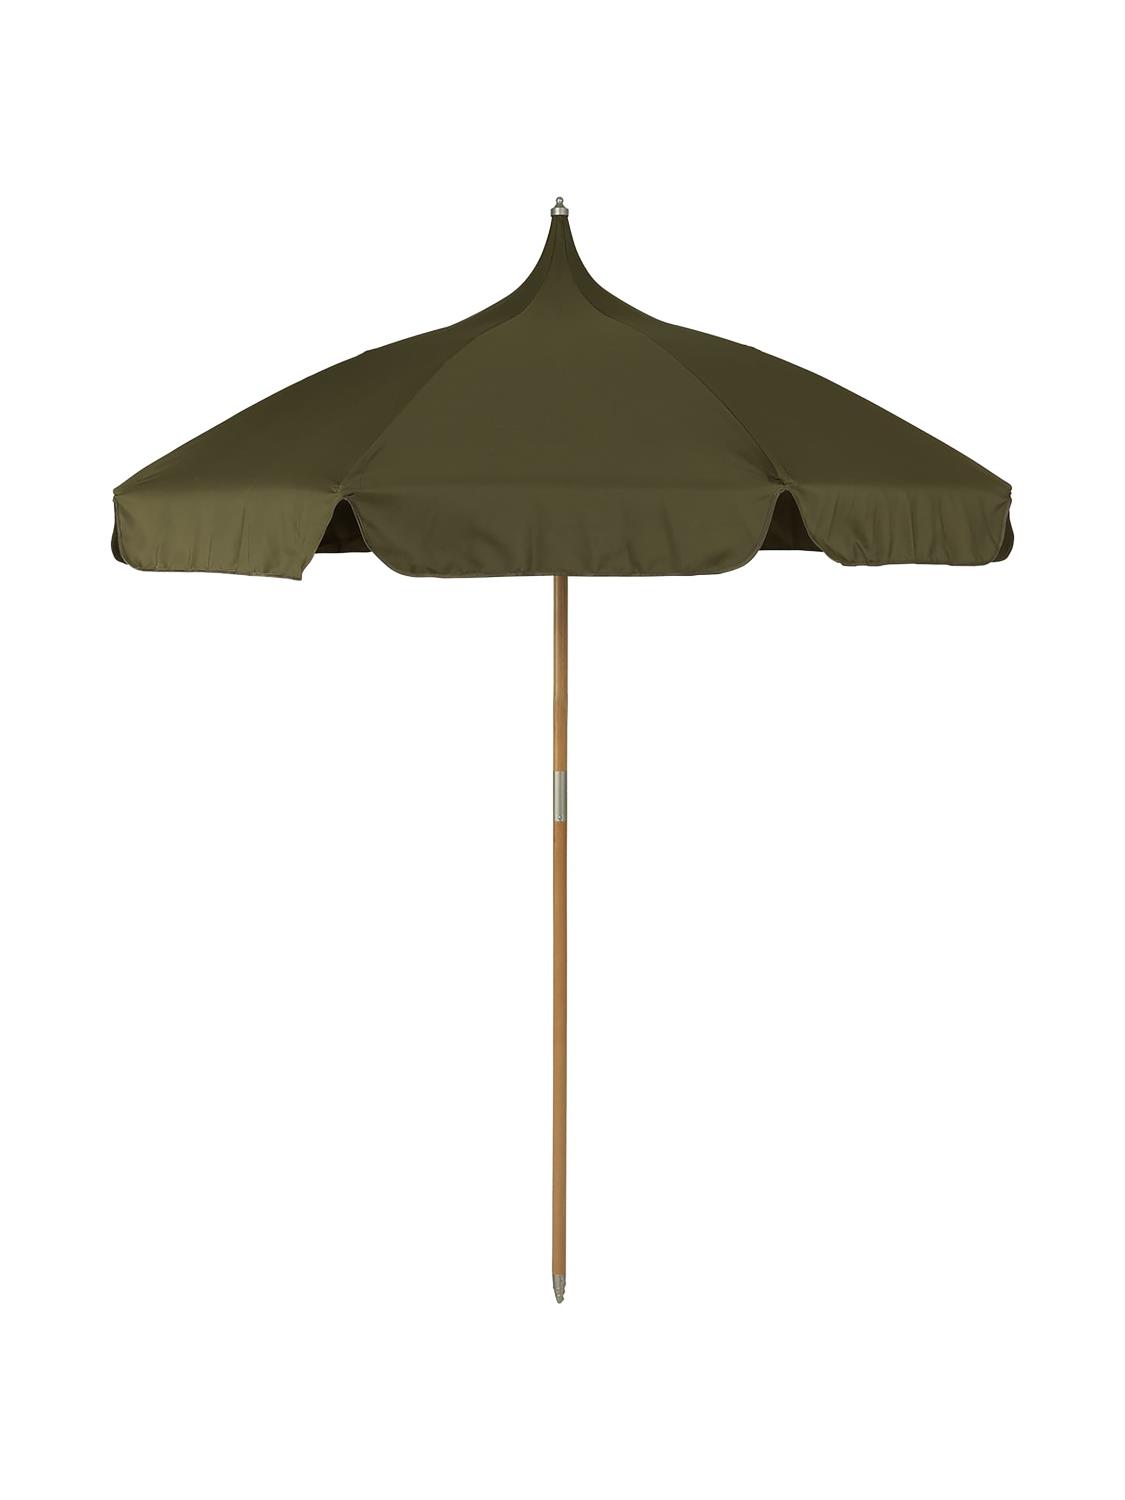 Ferm Living - Lull Umbrella - Military Olive